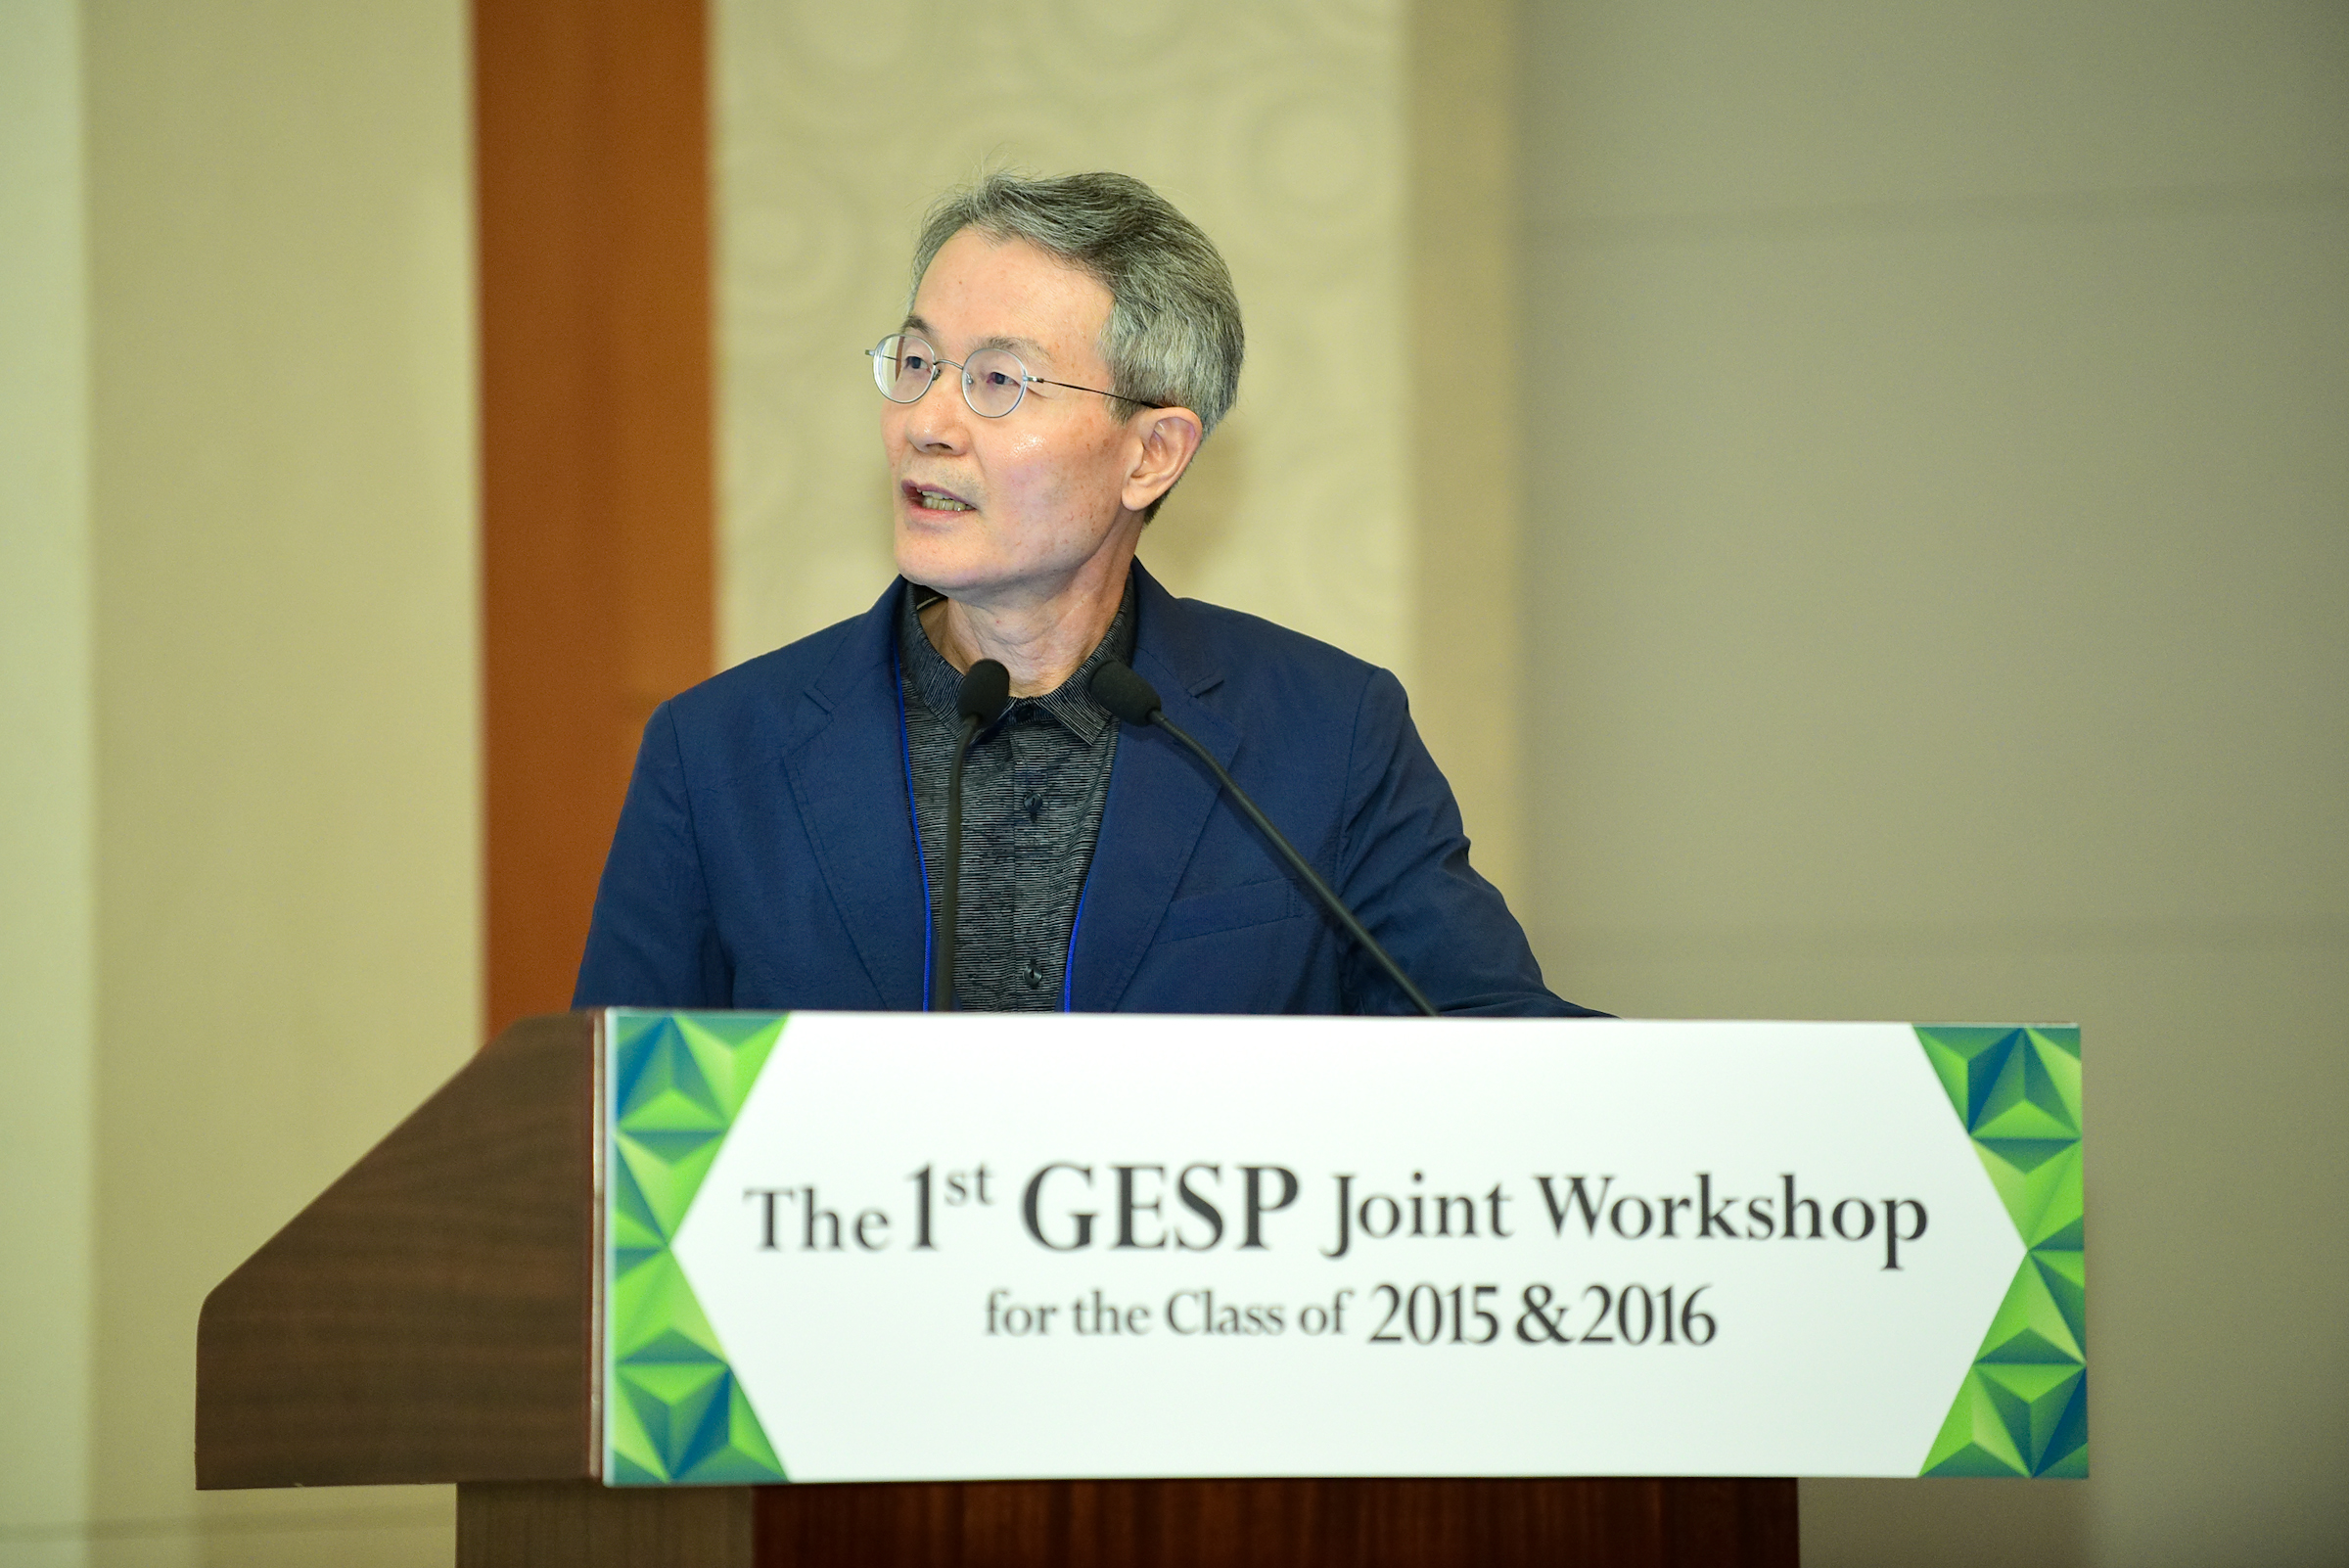 The 1st GESP Workshop 2016